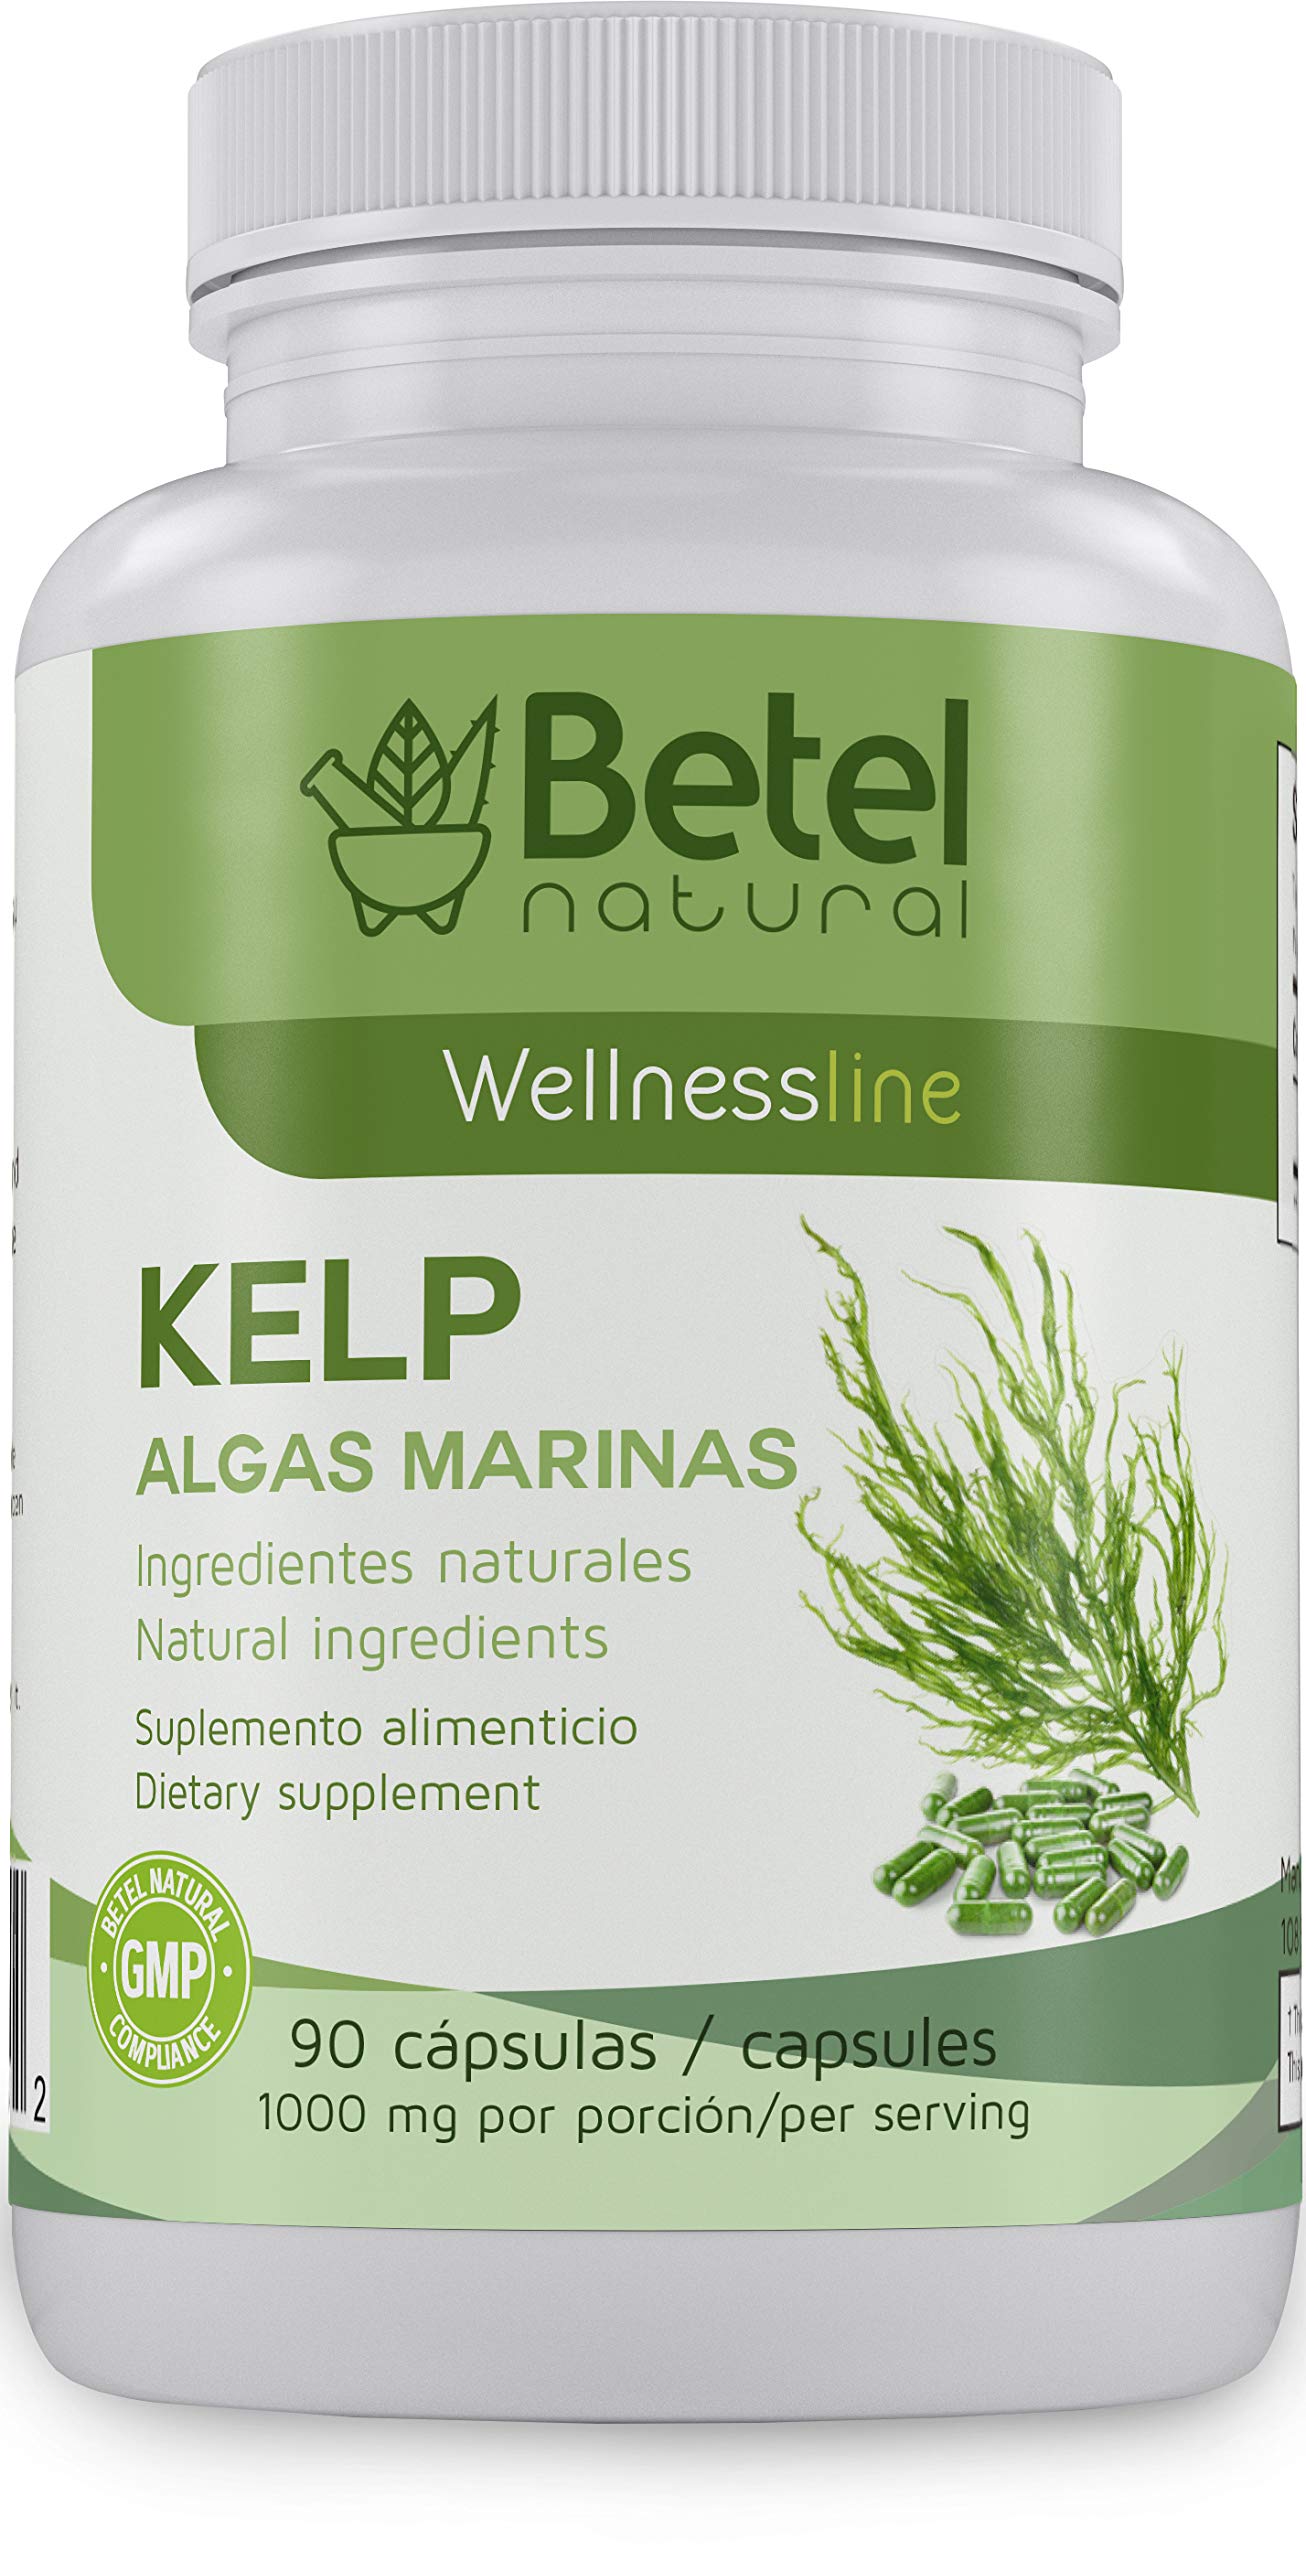 Algas Marinas/Kelp 90 Capsules by Betel Natural - 1000 mg per Serving -  Natural Iodine and Sea Nutrients